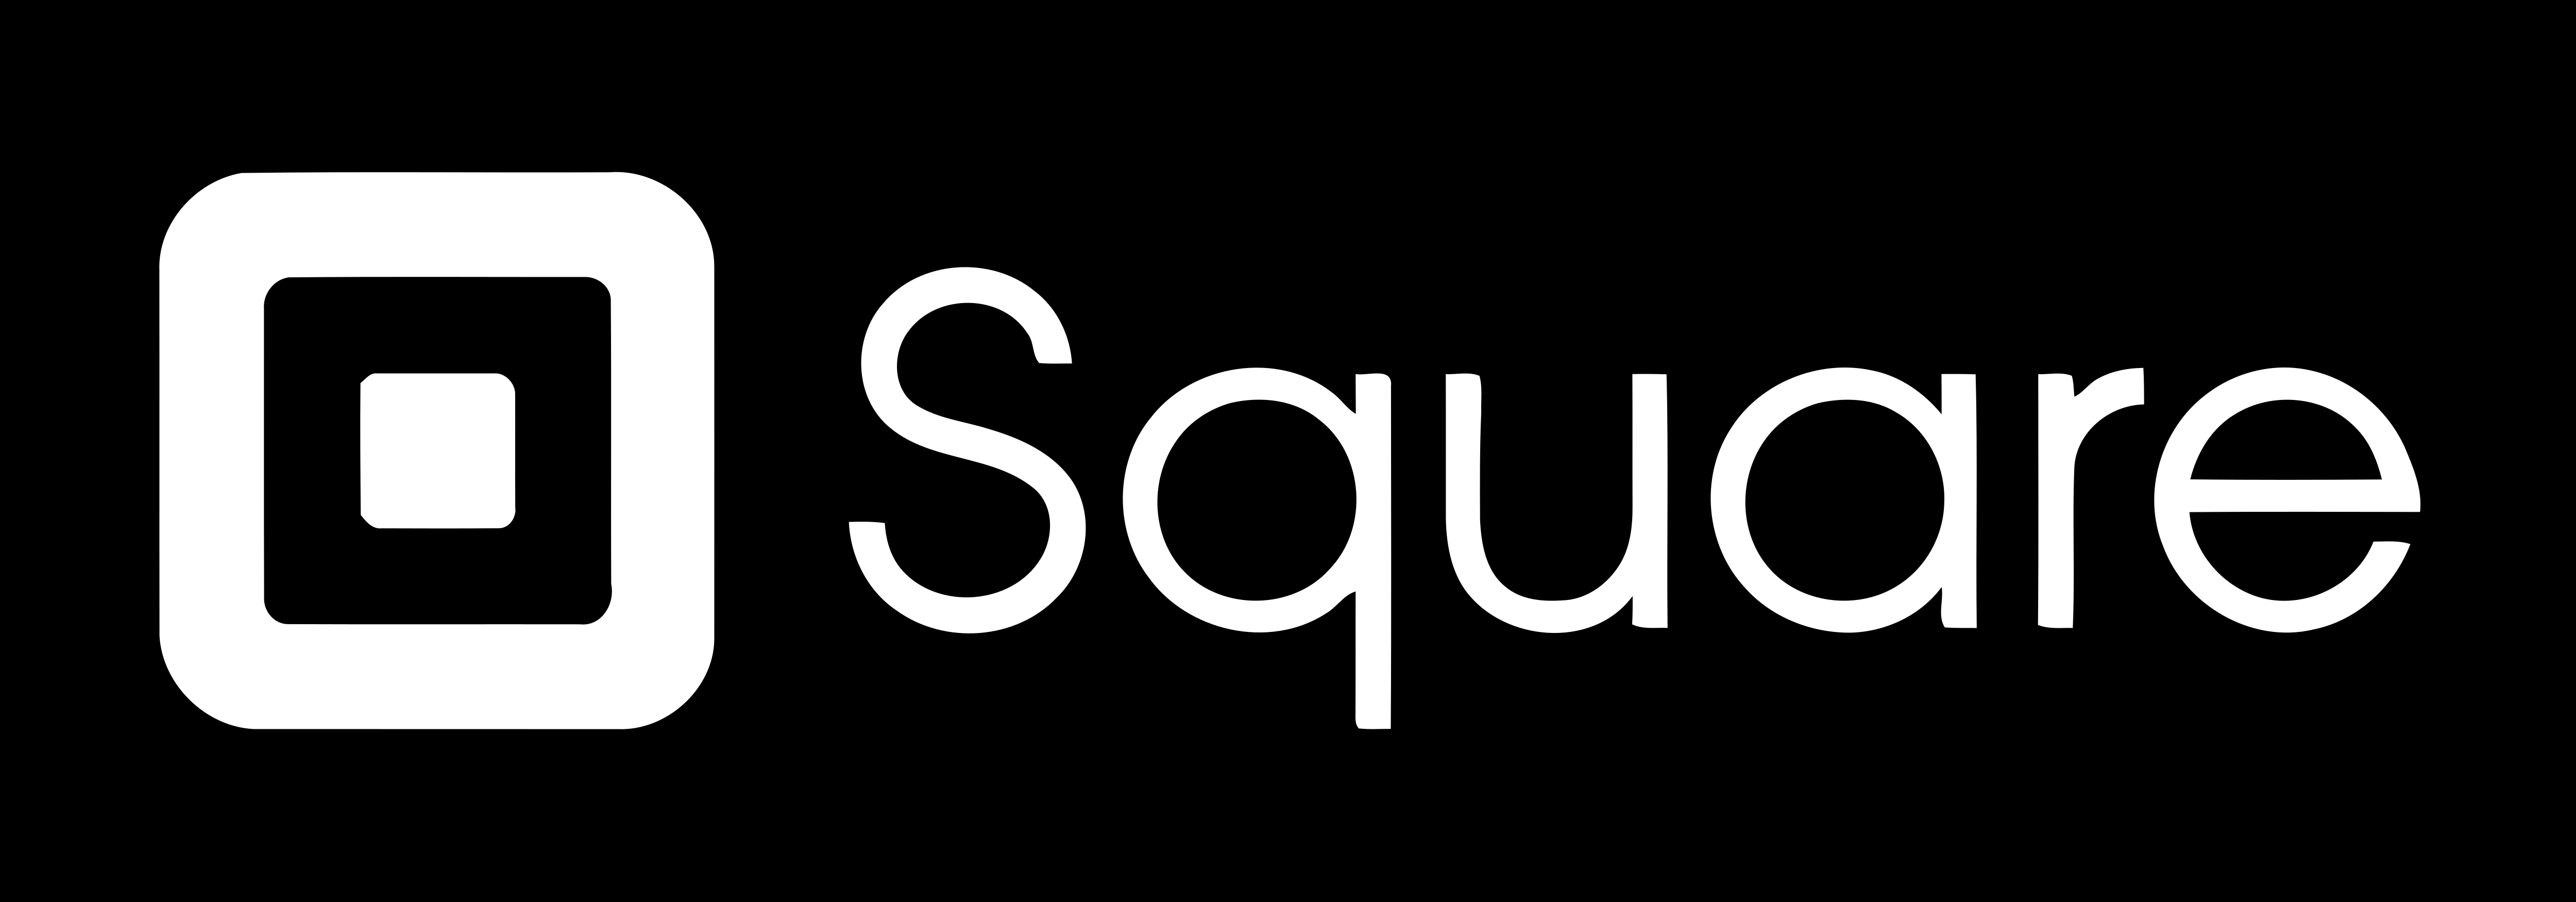 square logo png